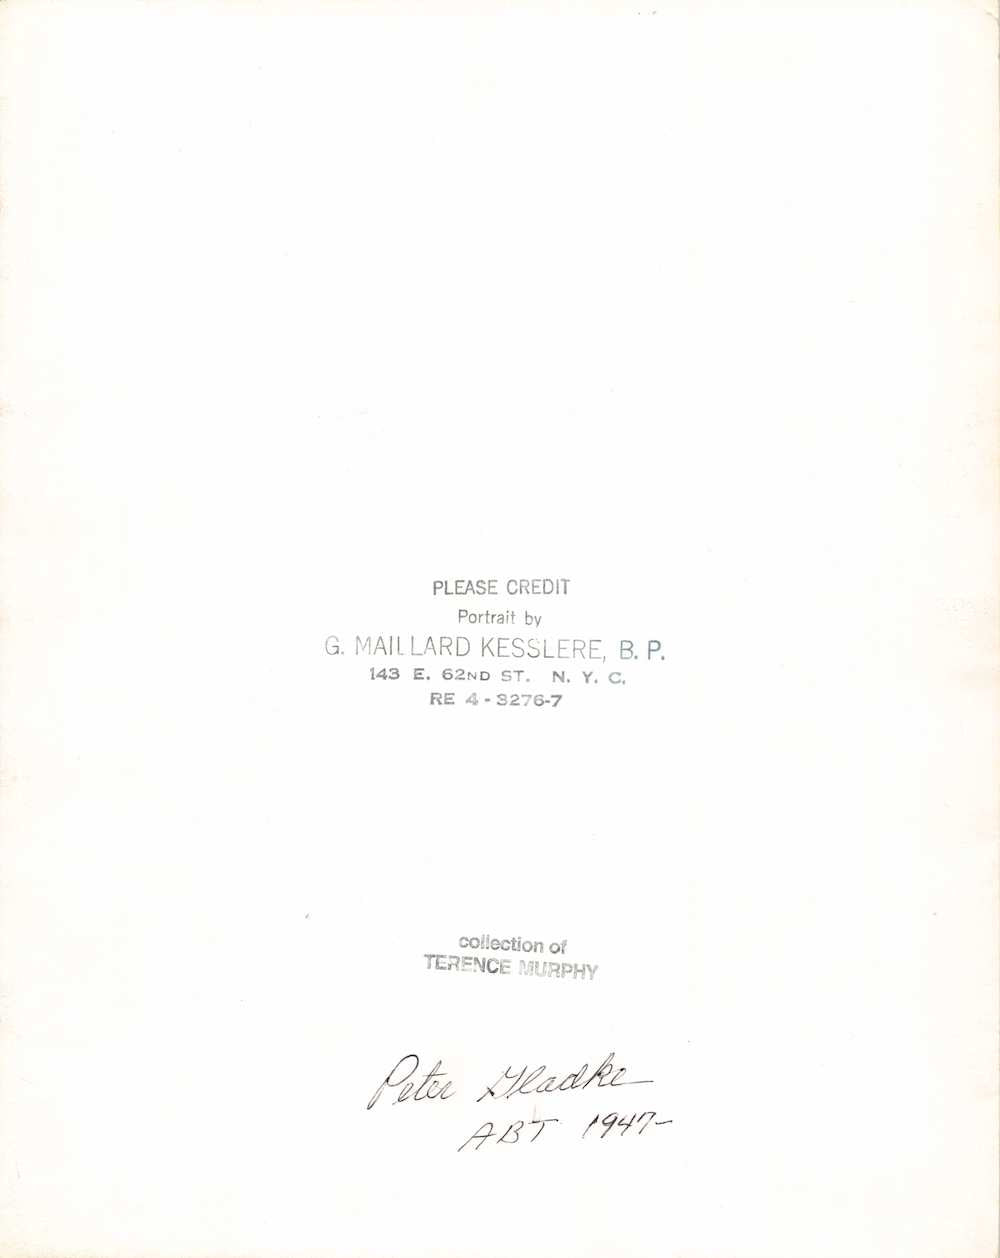 Peter Gladke Jackie Gleason Show Actor Vintage Autograph Signed Photo